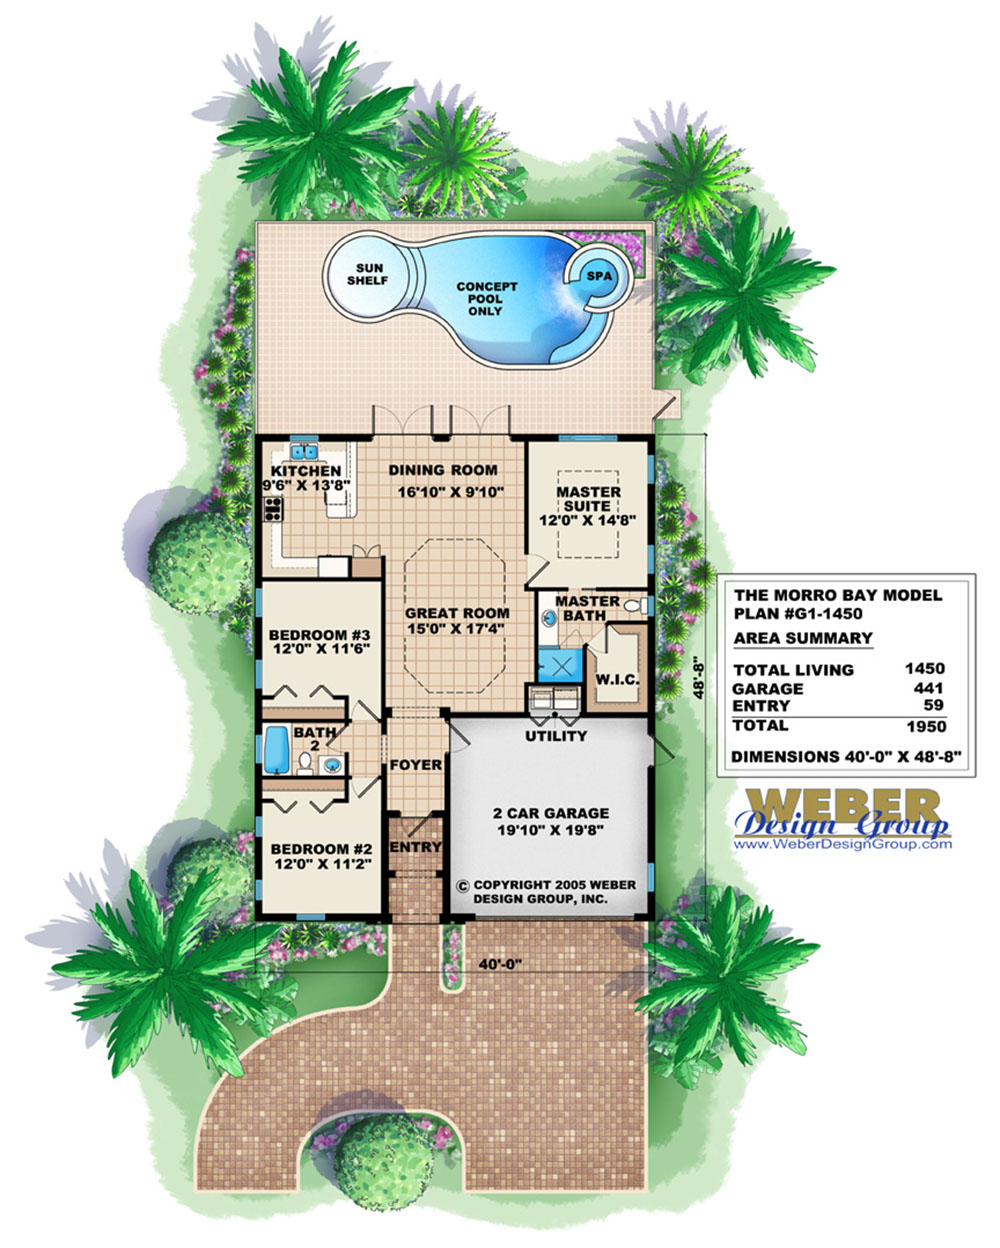 Morro Bay Home Plan Weber Design Group Naples Fl,4 Bedroom 5 Bathroom House Plans